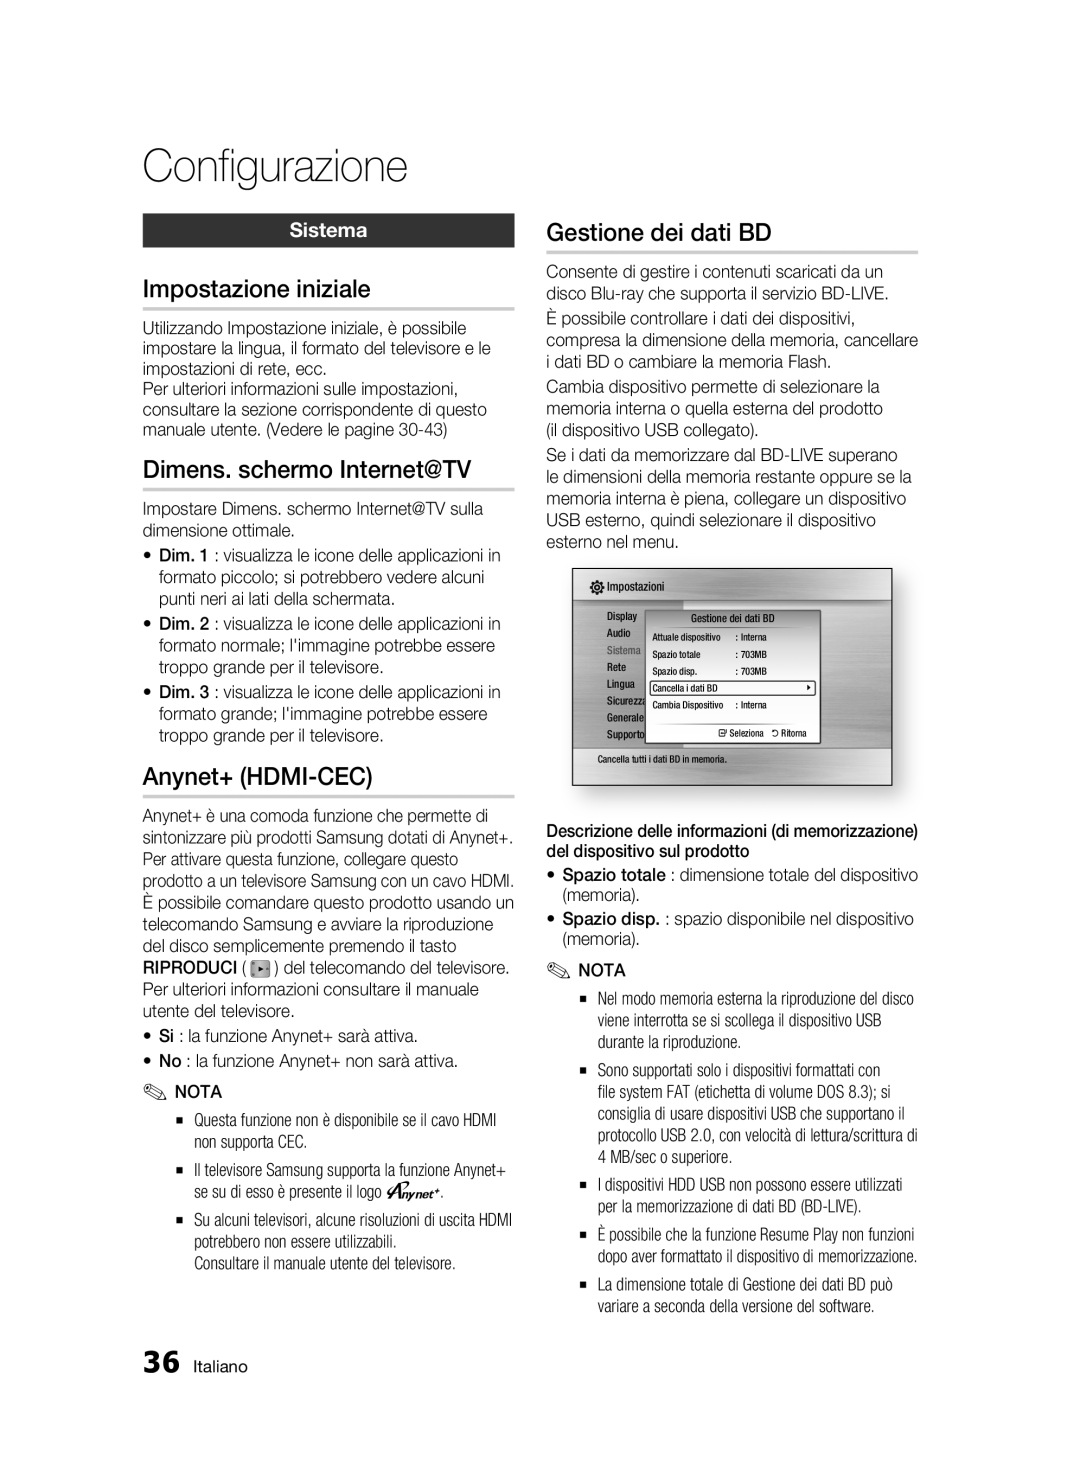 Samsung BD-C6500/XEF Impostazione iniziale, Dimens. schermo Internet@TV, Anynet+ HDMI-CEC, Gestione dei dati BD, Sistema 